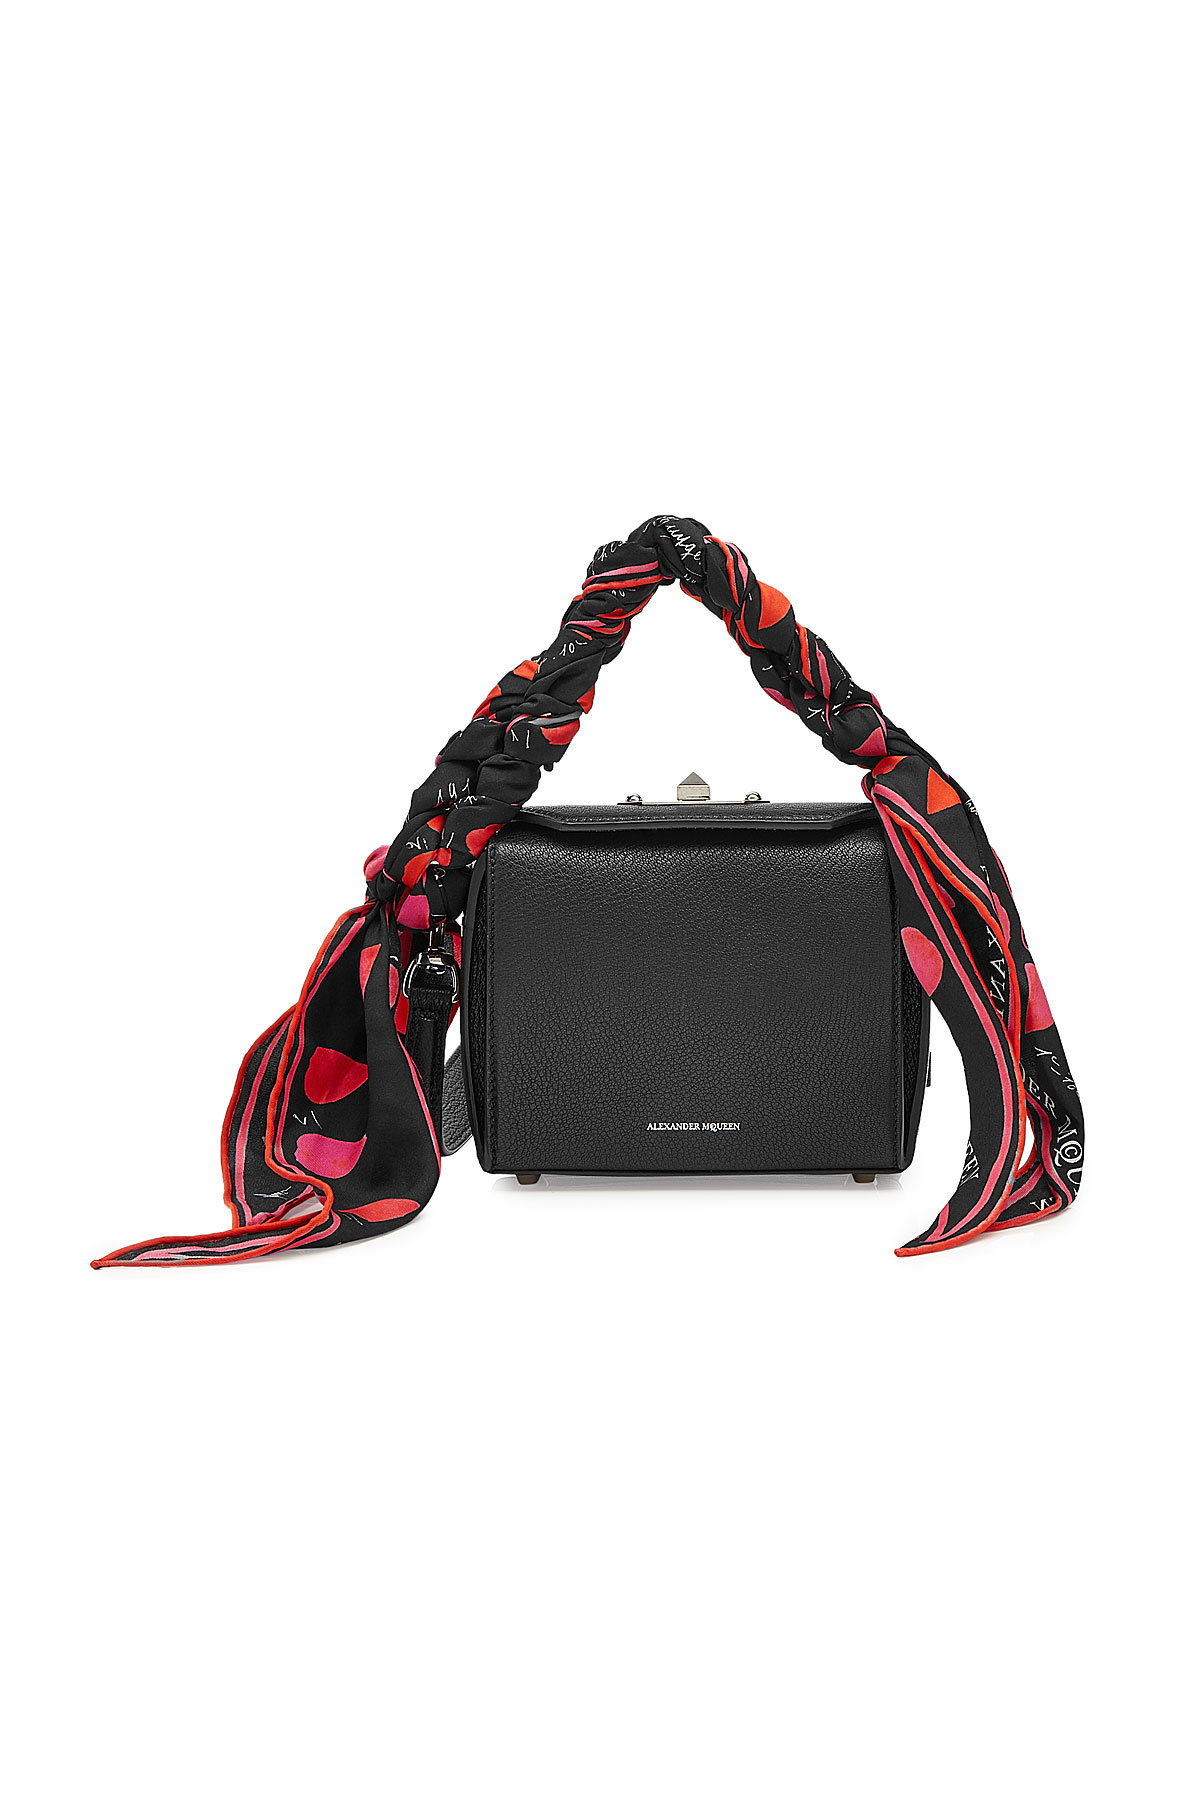 Alexander McQueen - Box Bag 16 Leather Shoulder Bag with Silk Scarf Handles